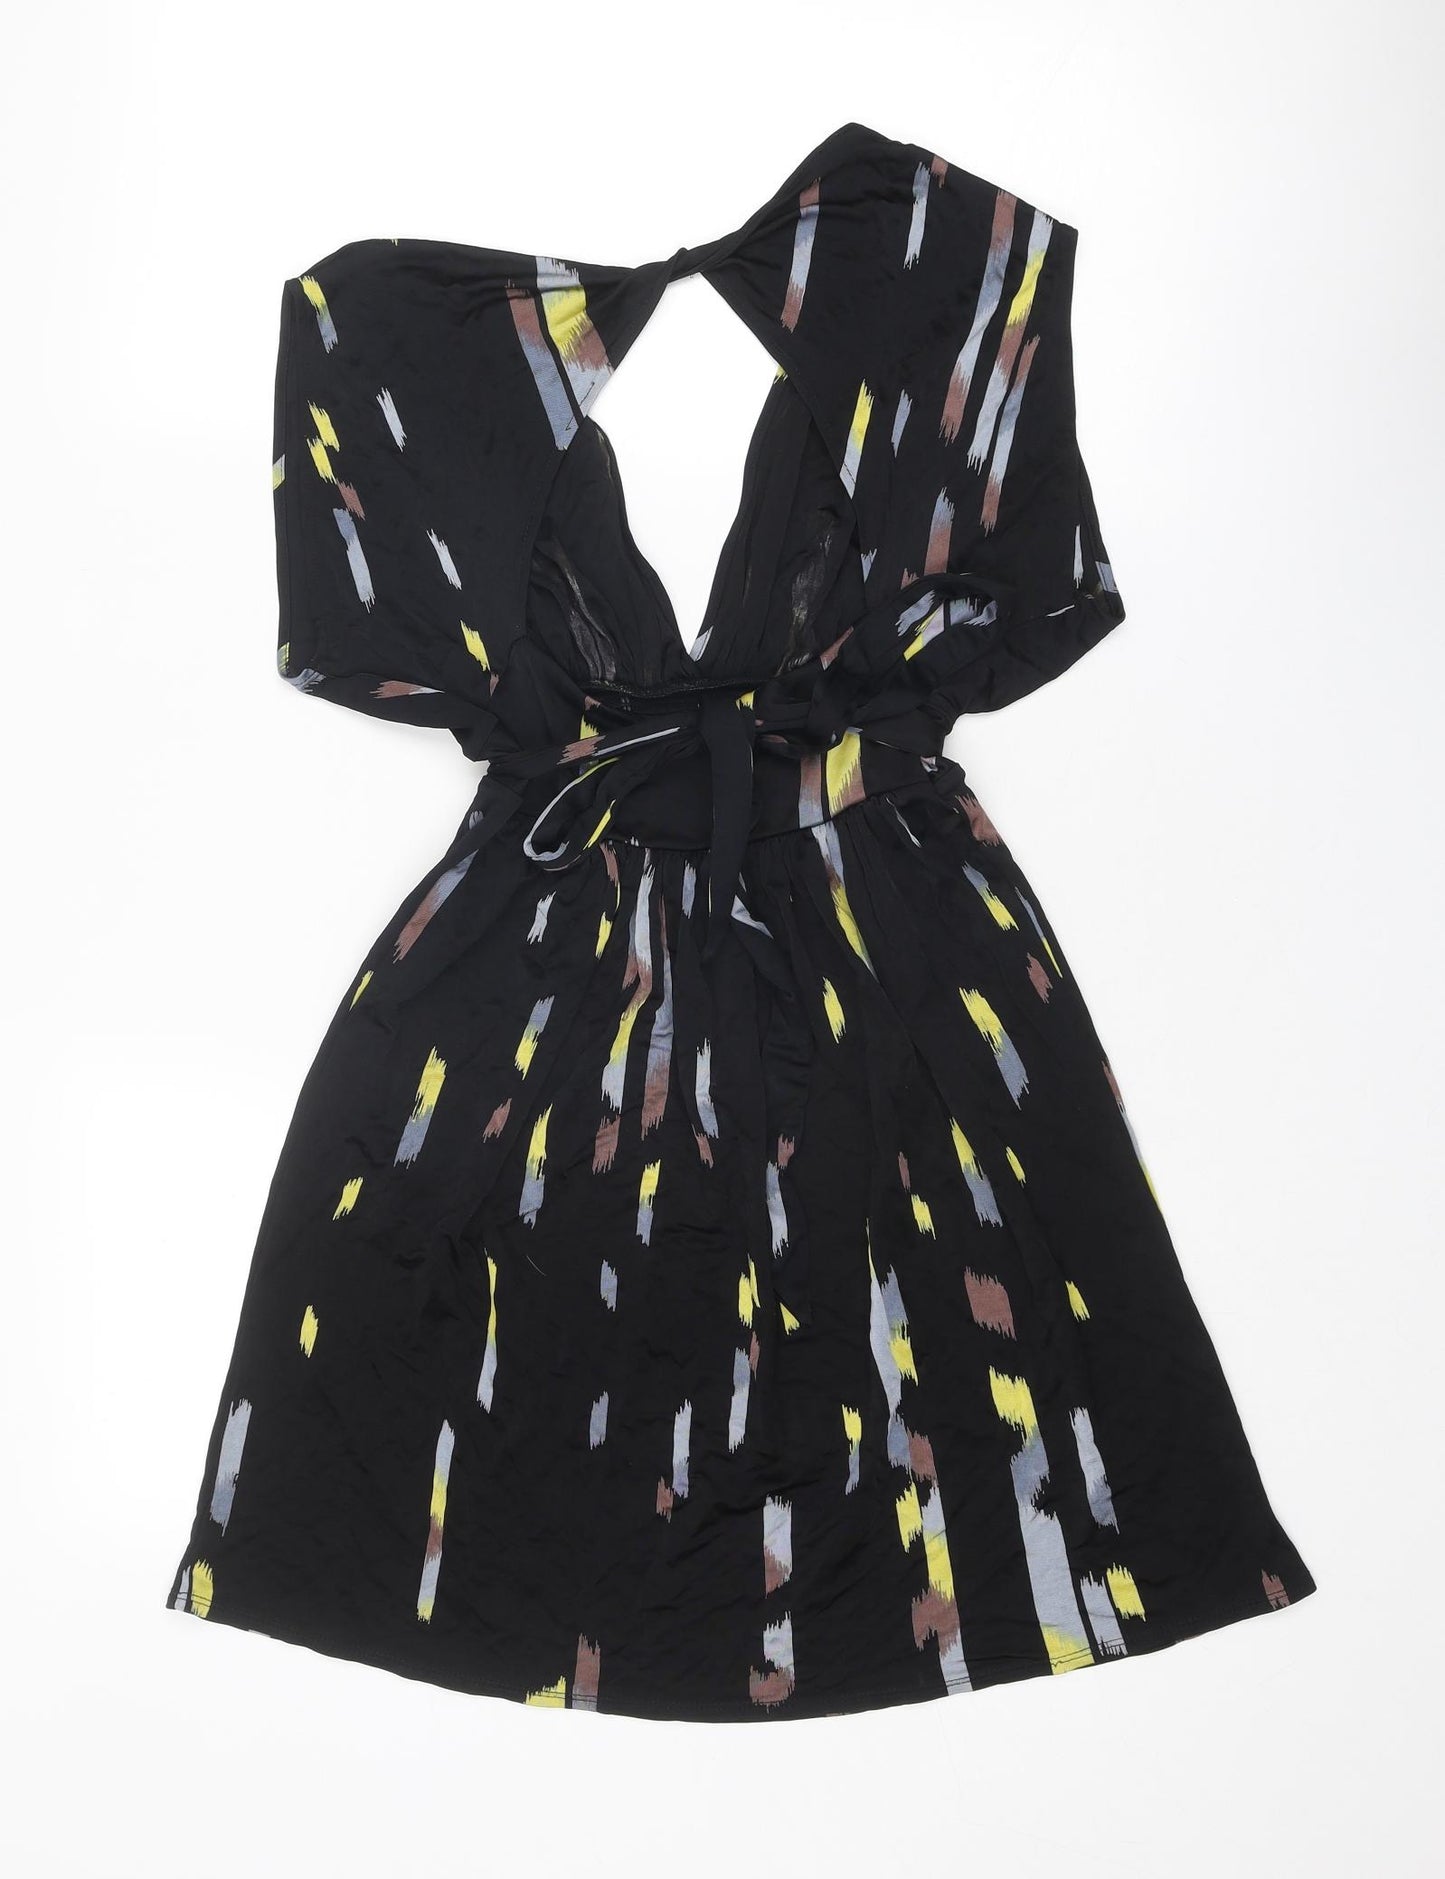 Miss Selfridge Womens Black Geometric Polyester Fit & Flare Size 10 V-Neck Pullover